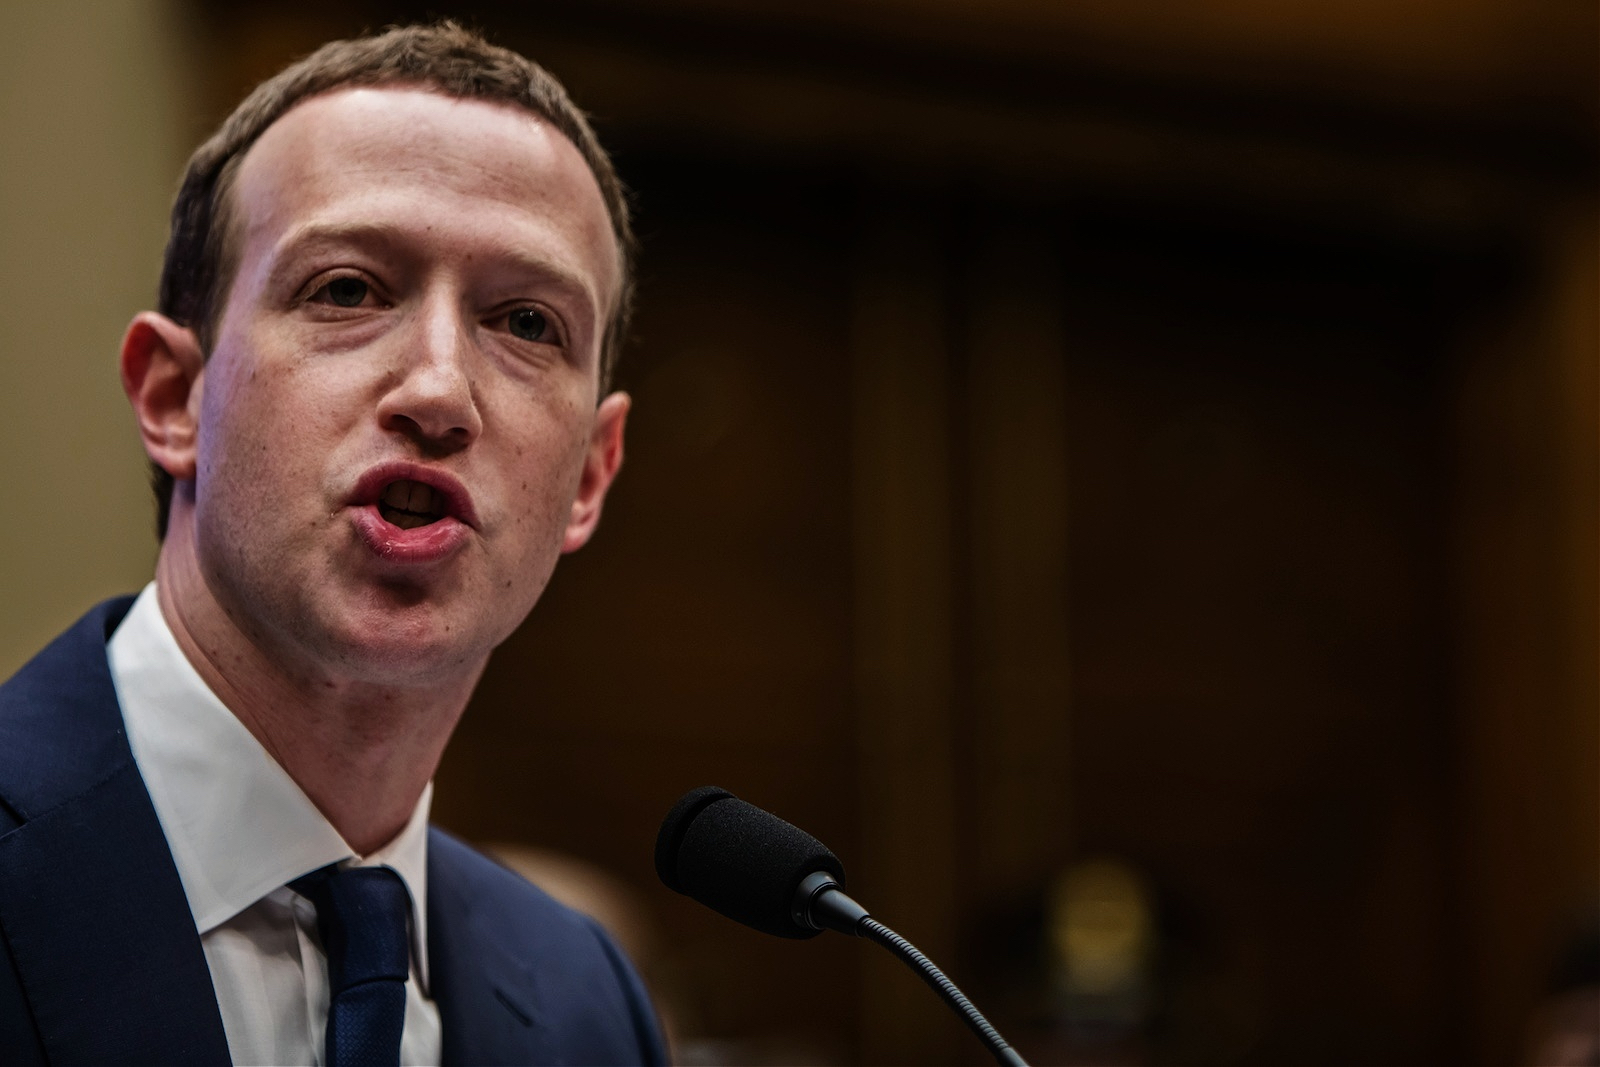 Facebook CEO Mark Zuckerberg testifying in front of Congress